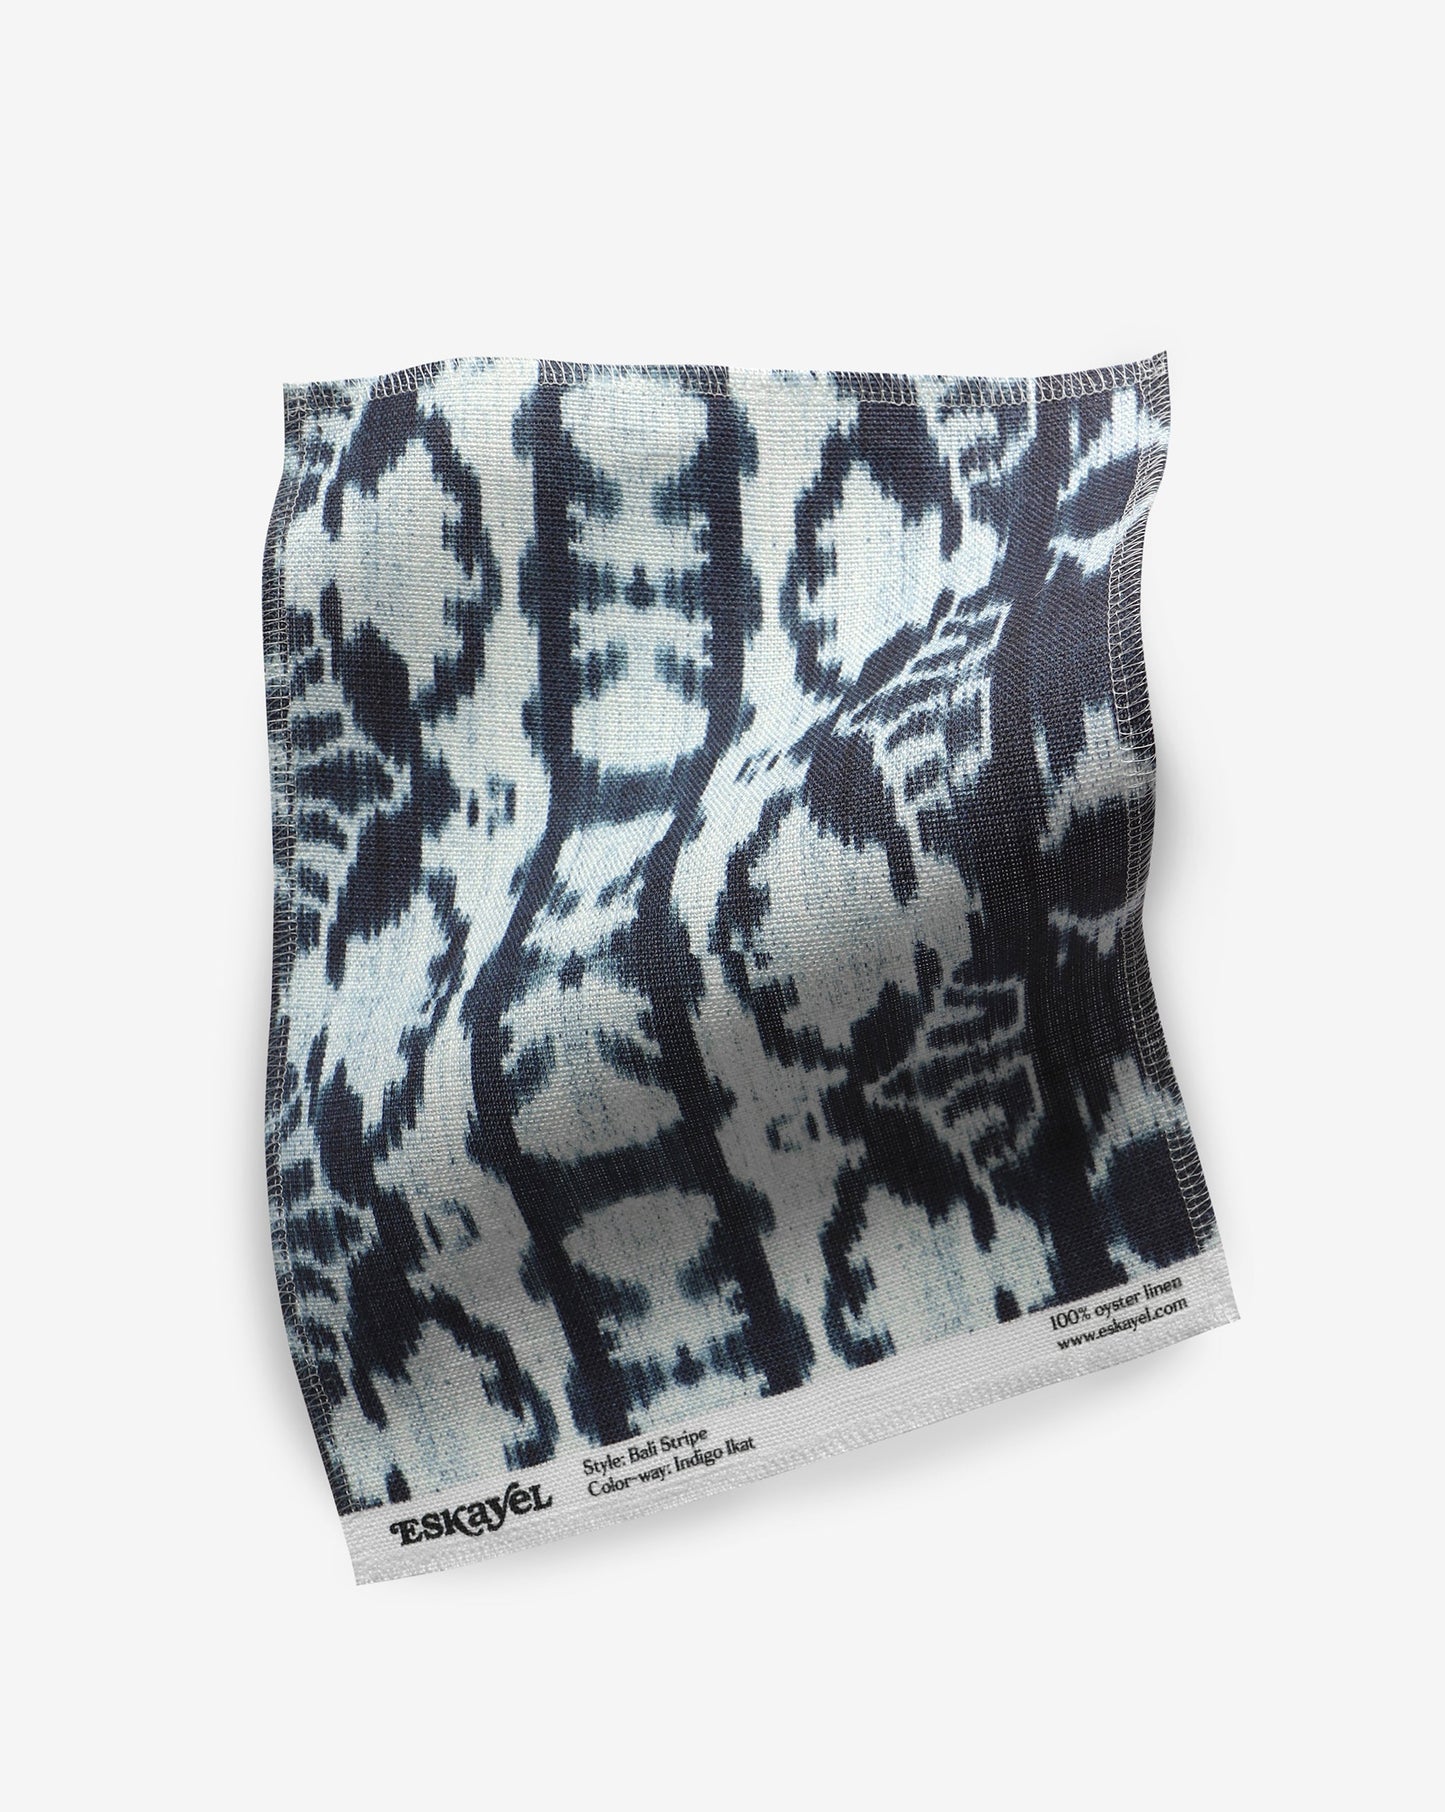 A Bali Stripe Fabric fabric boasting a blue and white pattern